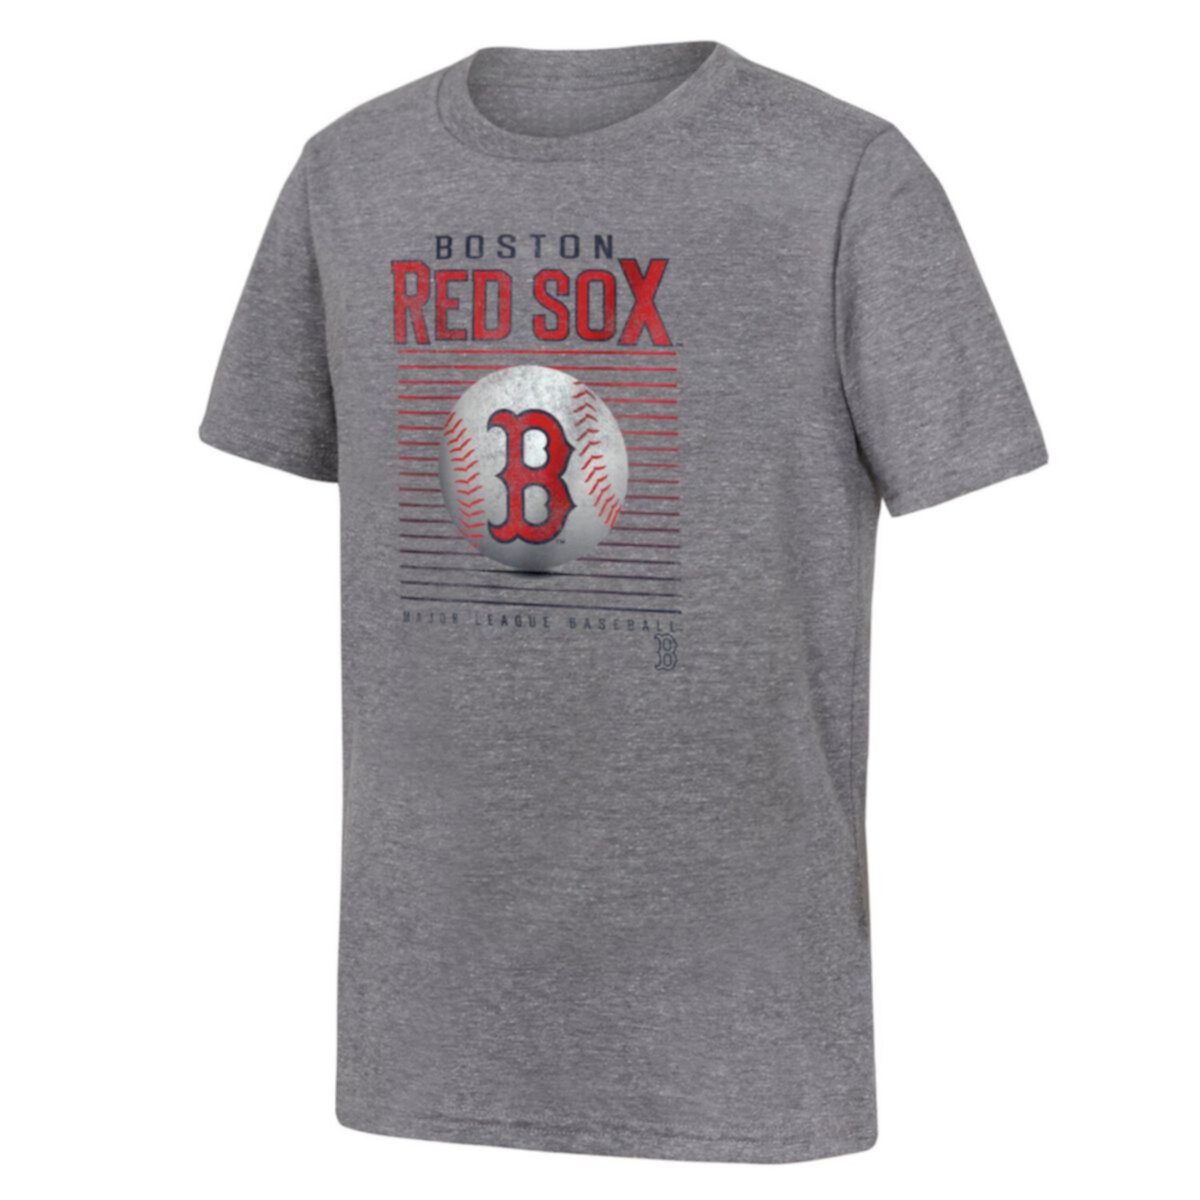 Серая футболка с логотипом Youth Fanatics Boston Red Sox Relief Pitcher Tri-Blend Unbranded